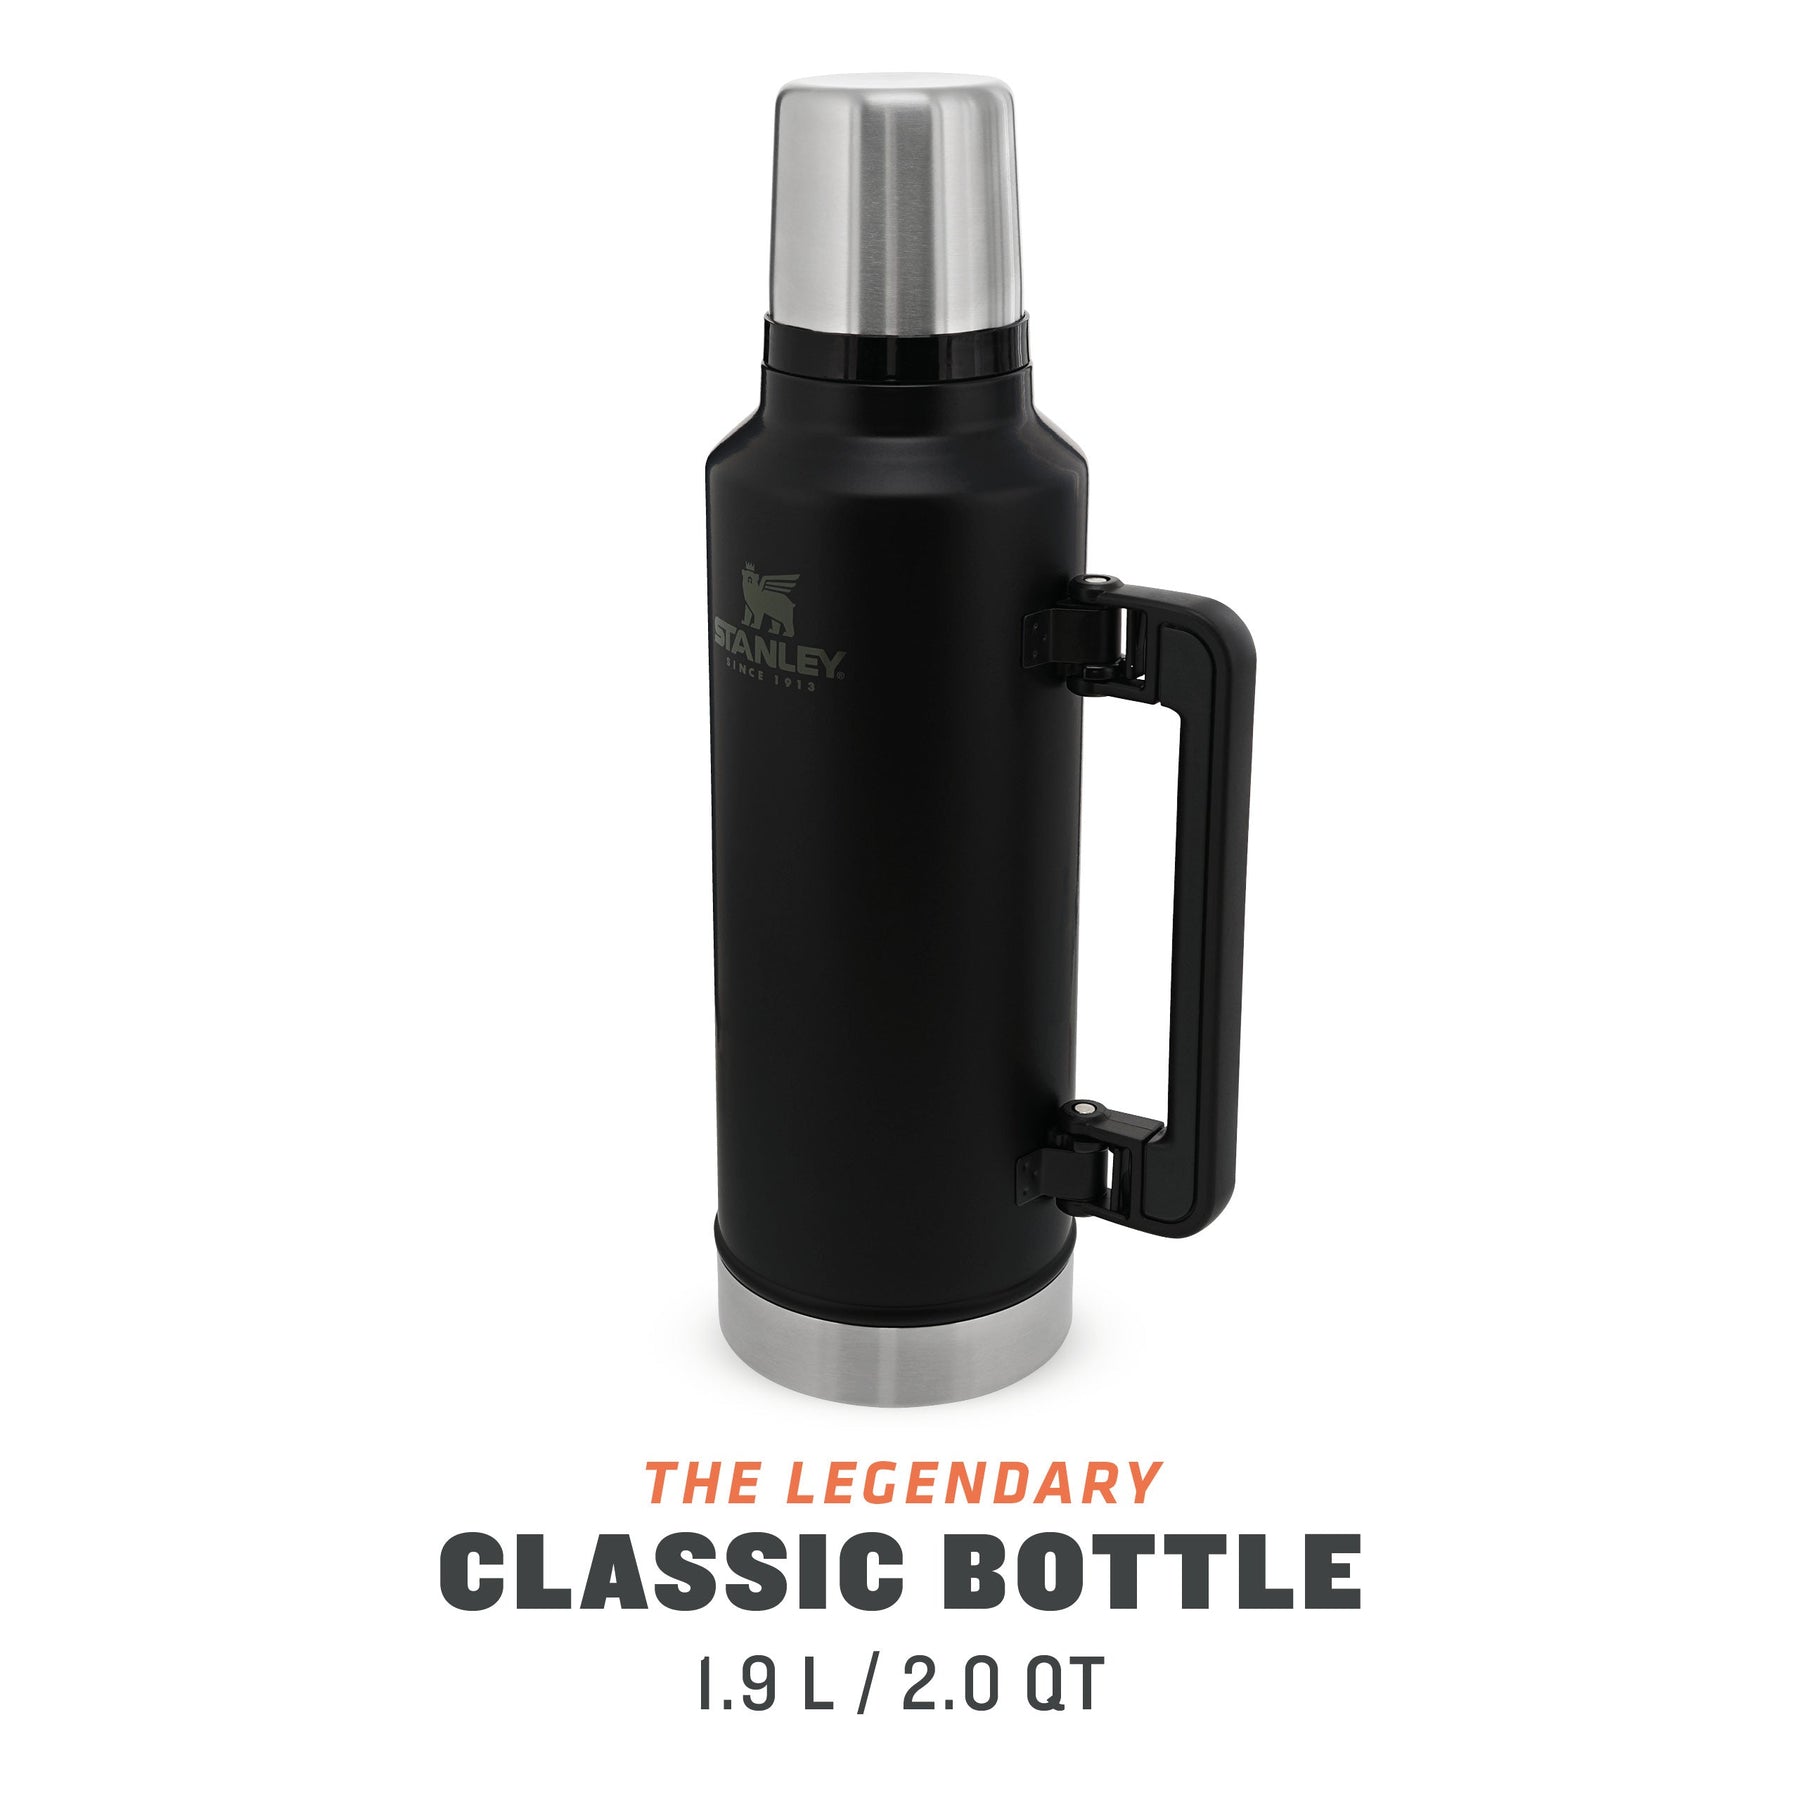 Stanley x Pendleton Classic Bottle, 1.5 QT in 2023